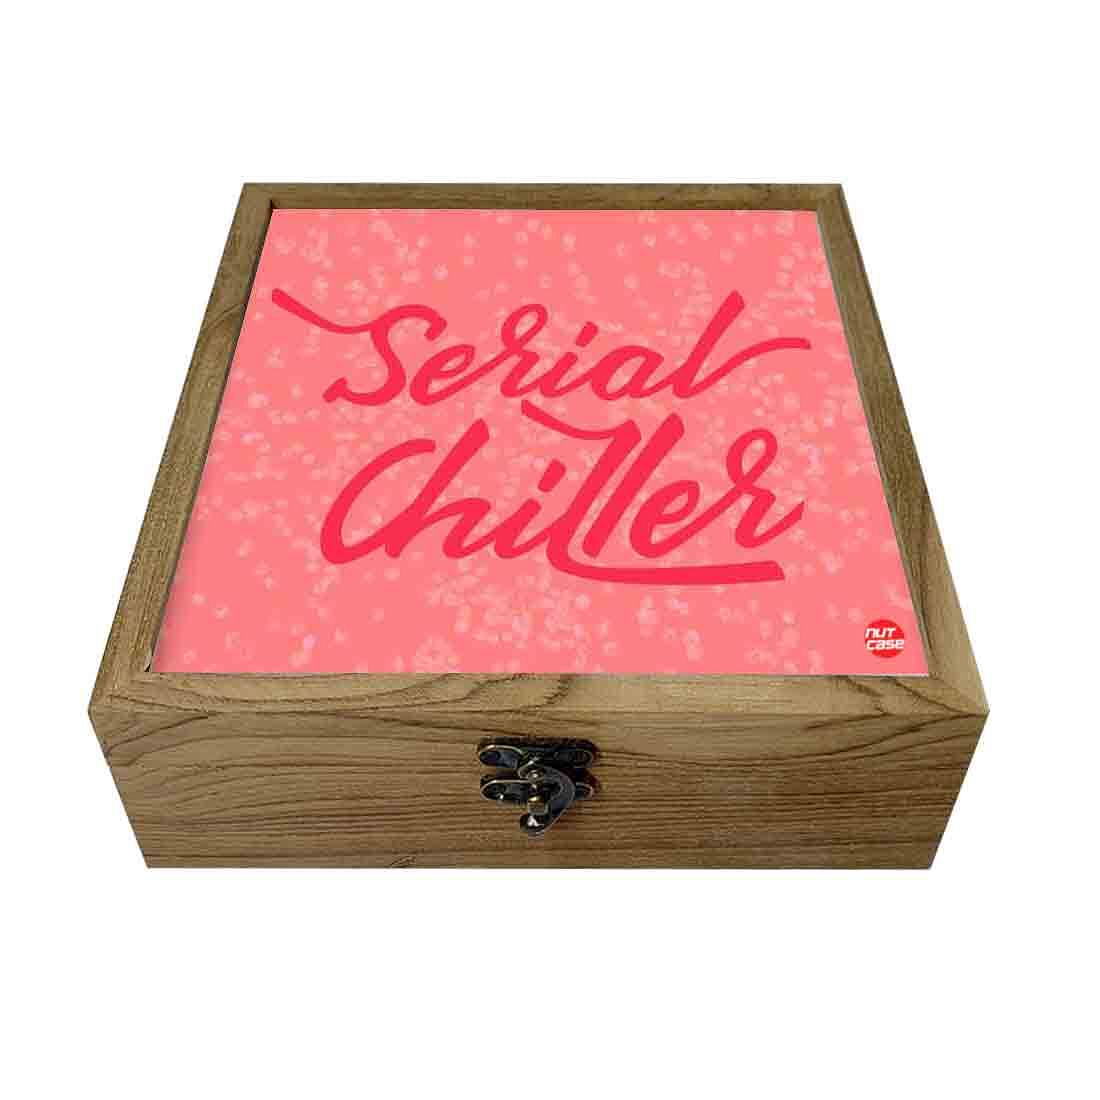 Hip Flask Gift Box -Serial Chiller Nutcase